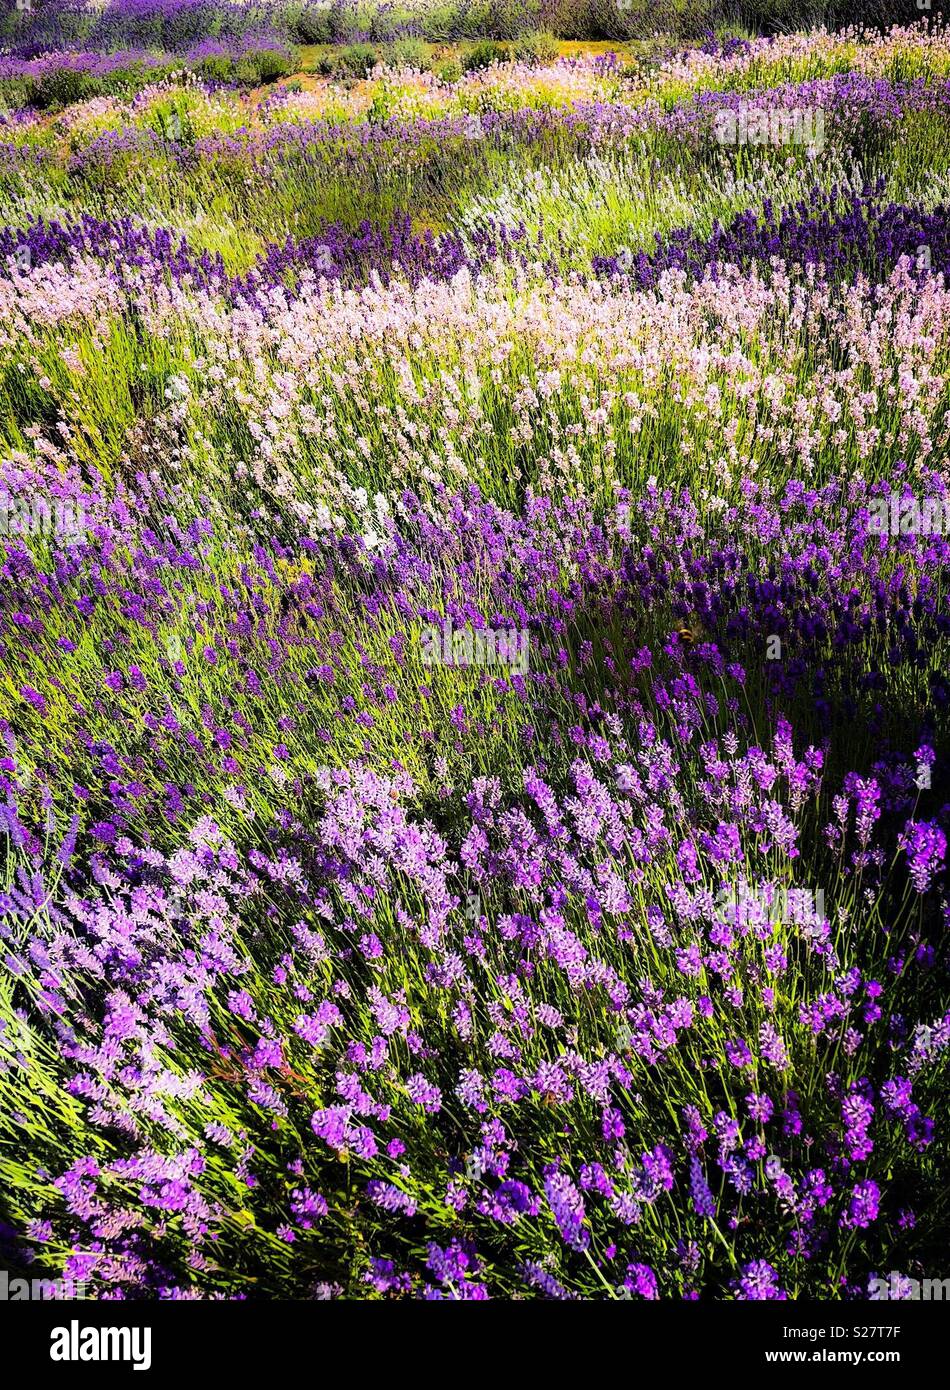 Lavender varieties planted in rows Stock Photo